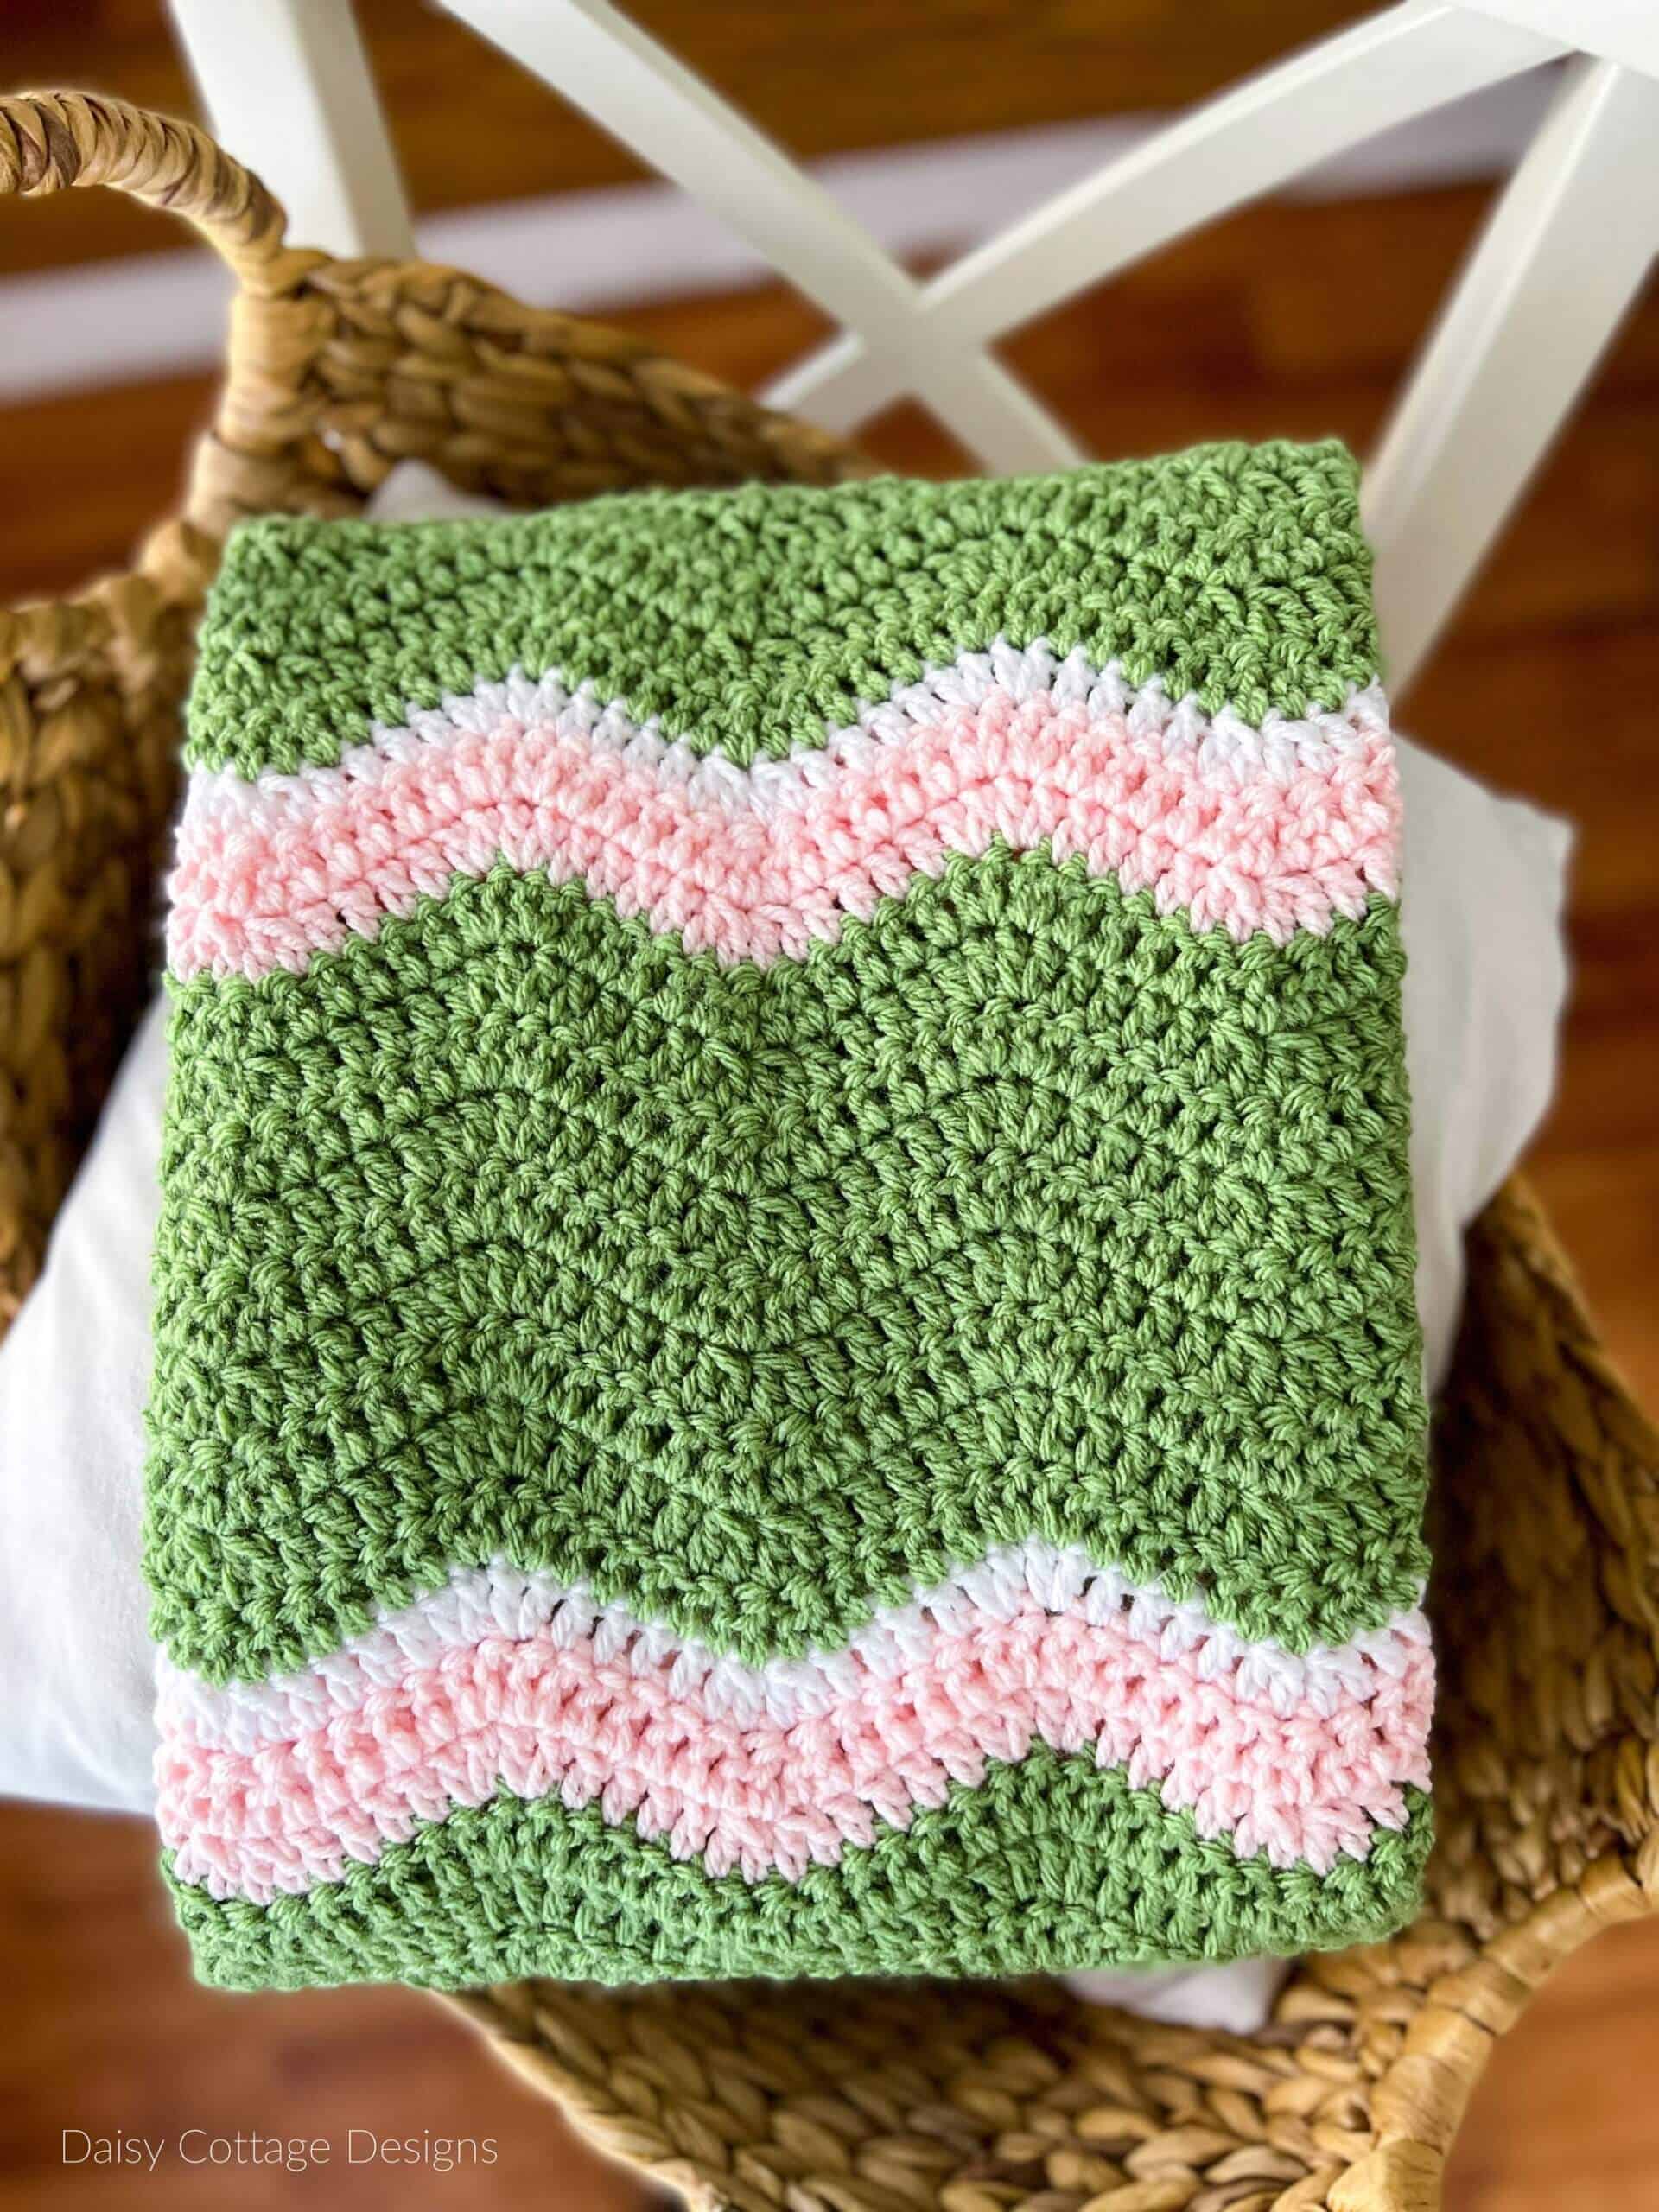 https://daisycottagedesigns.net/wp-content/uploads/2021/12/Crochet-Blanket-in-a-Basket-scaled.jpg